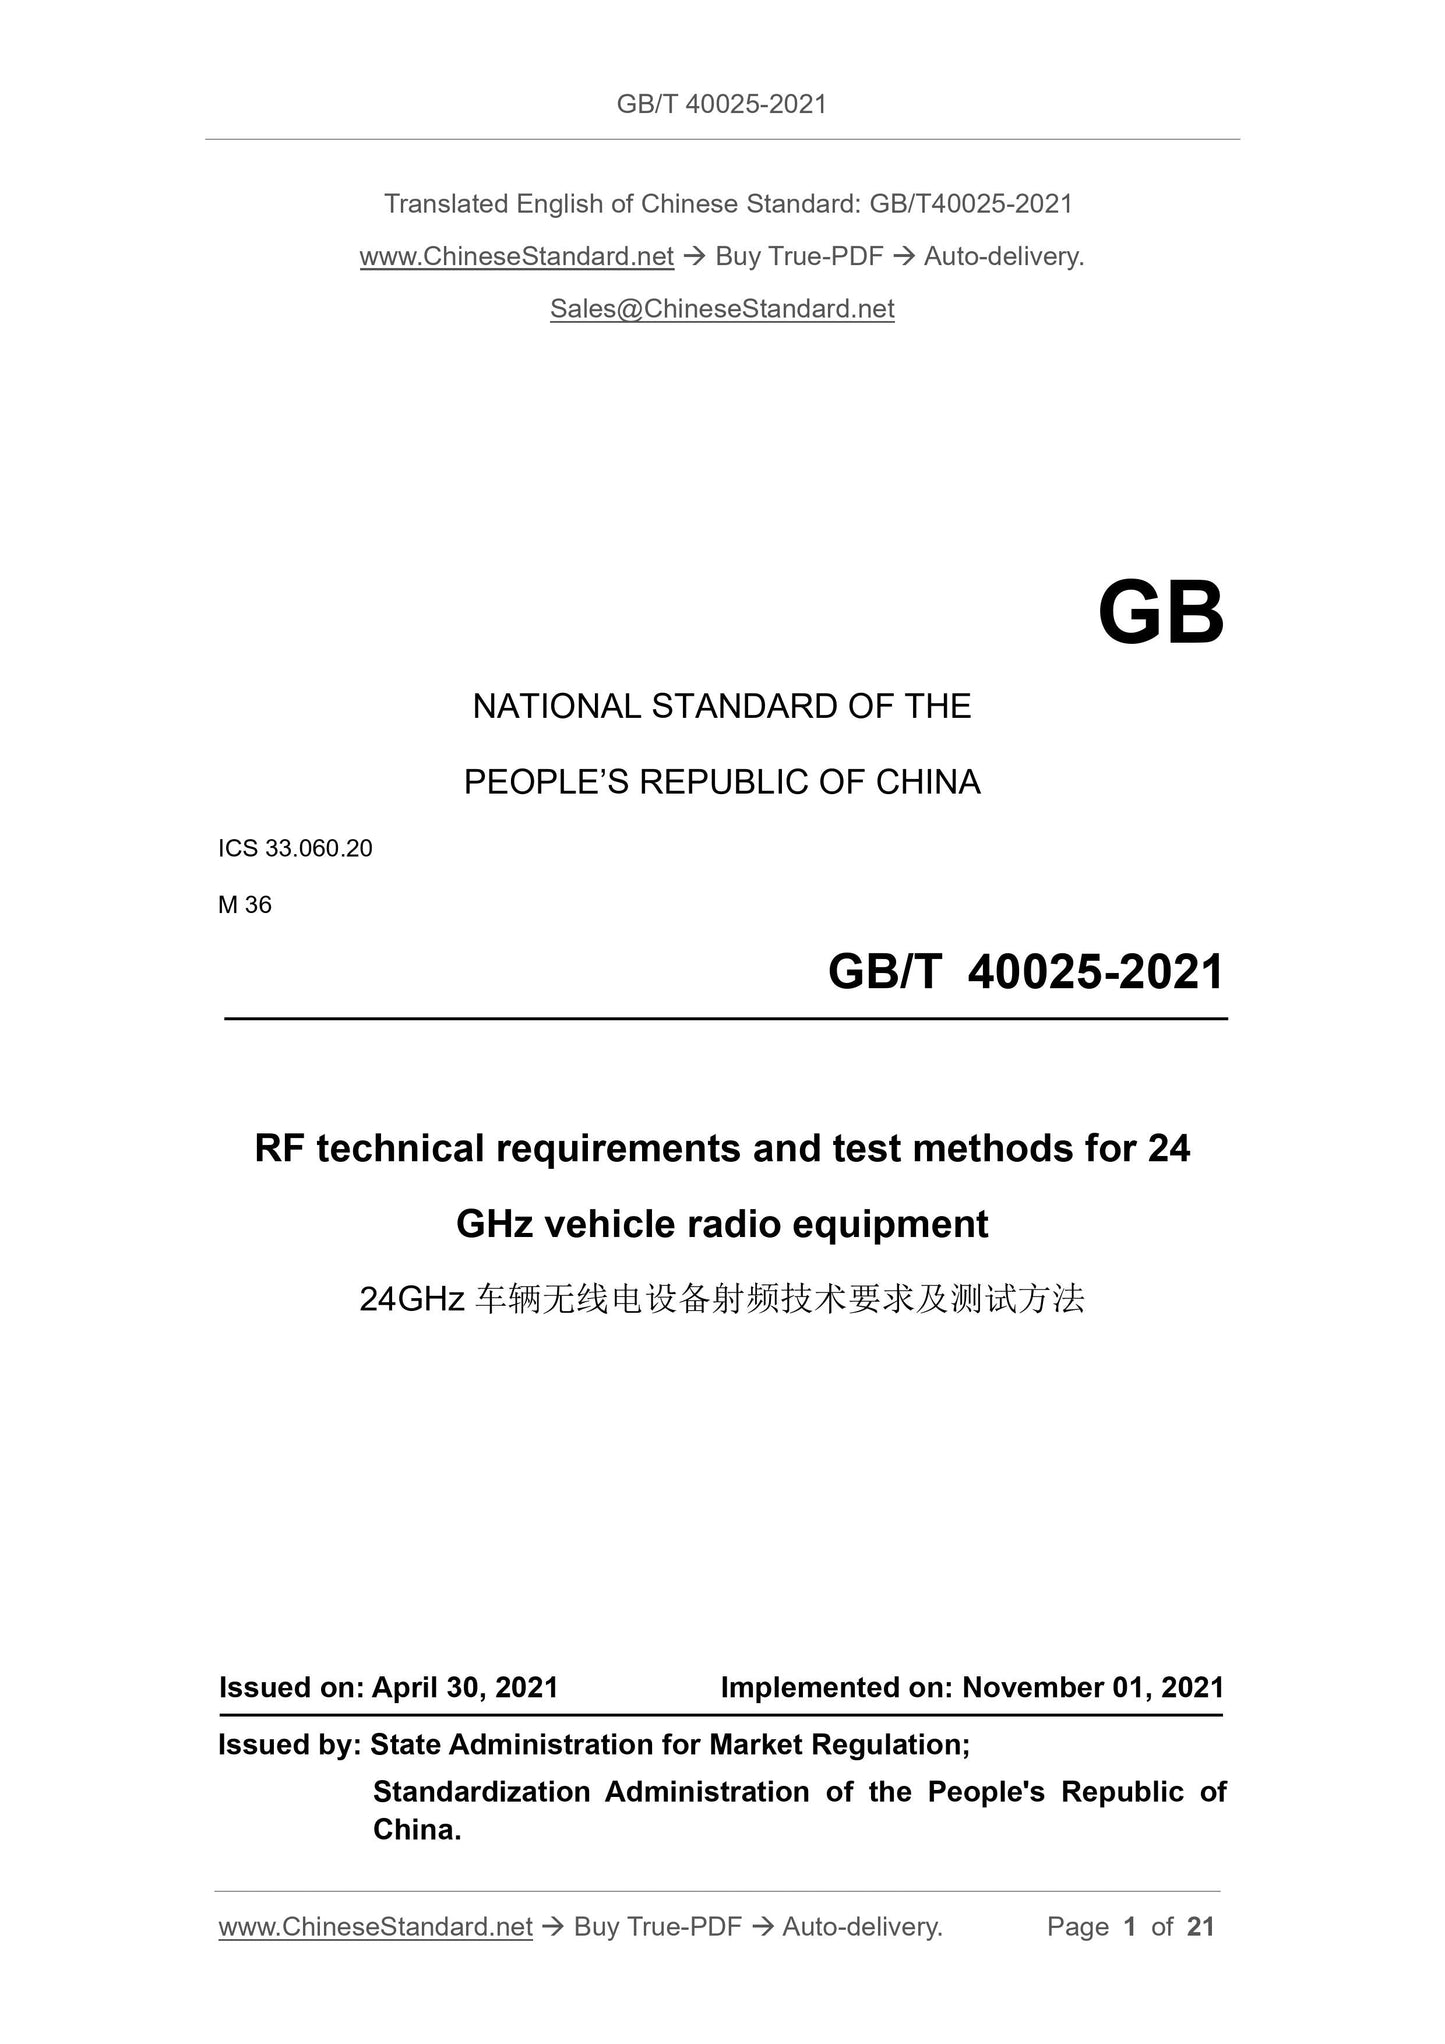 GBT40025-2021 Page 1